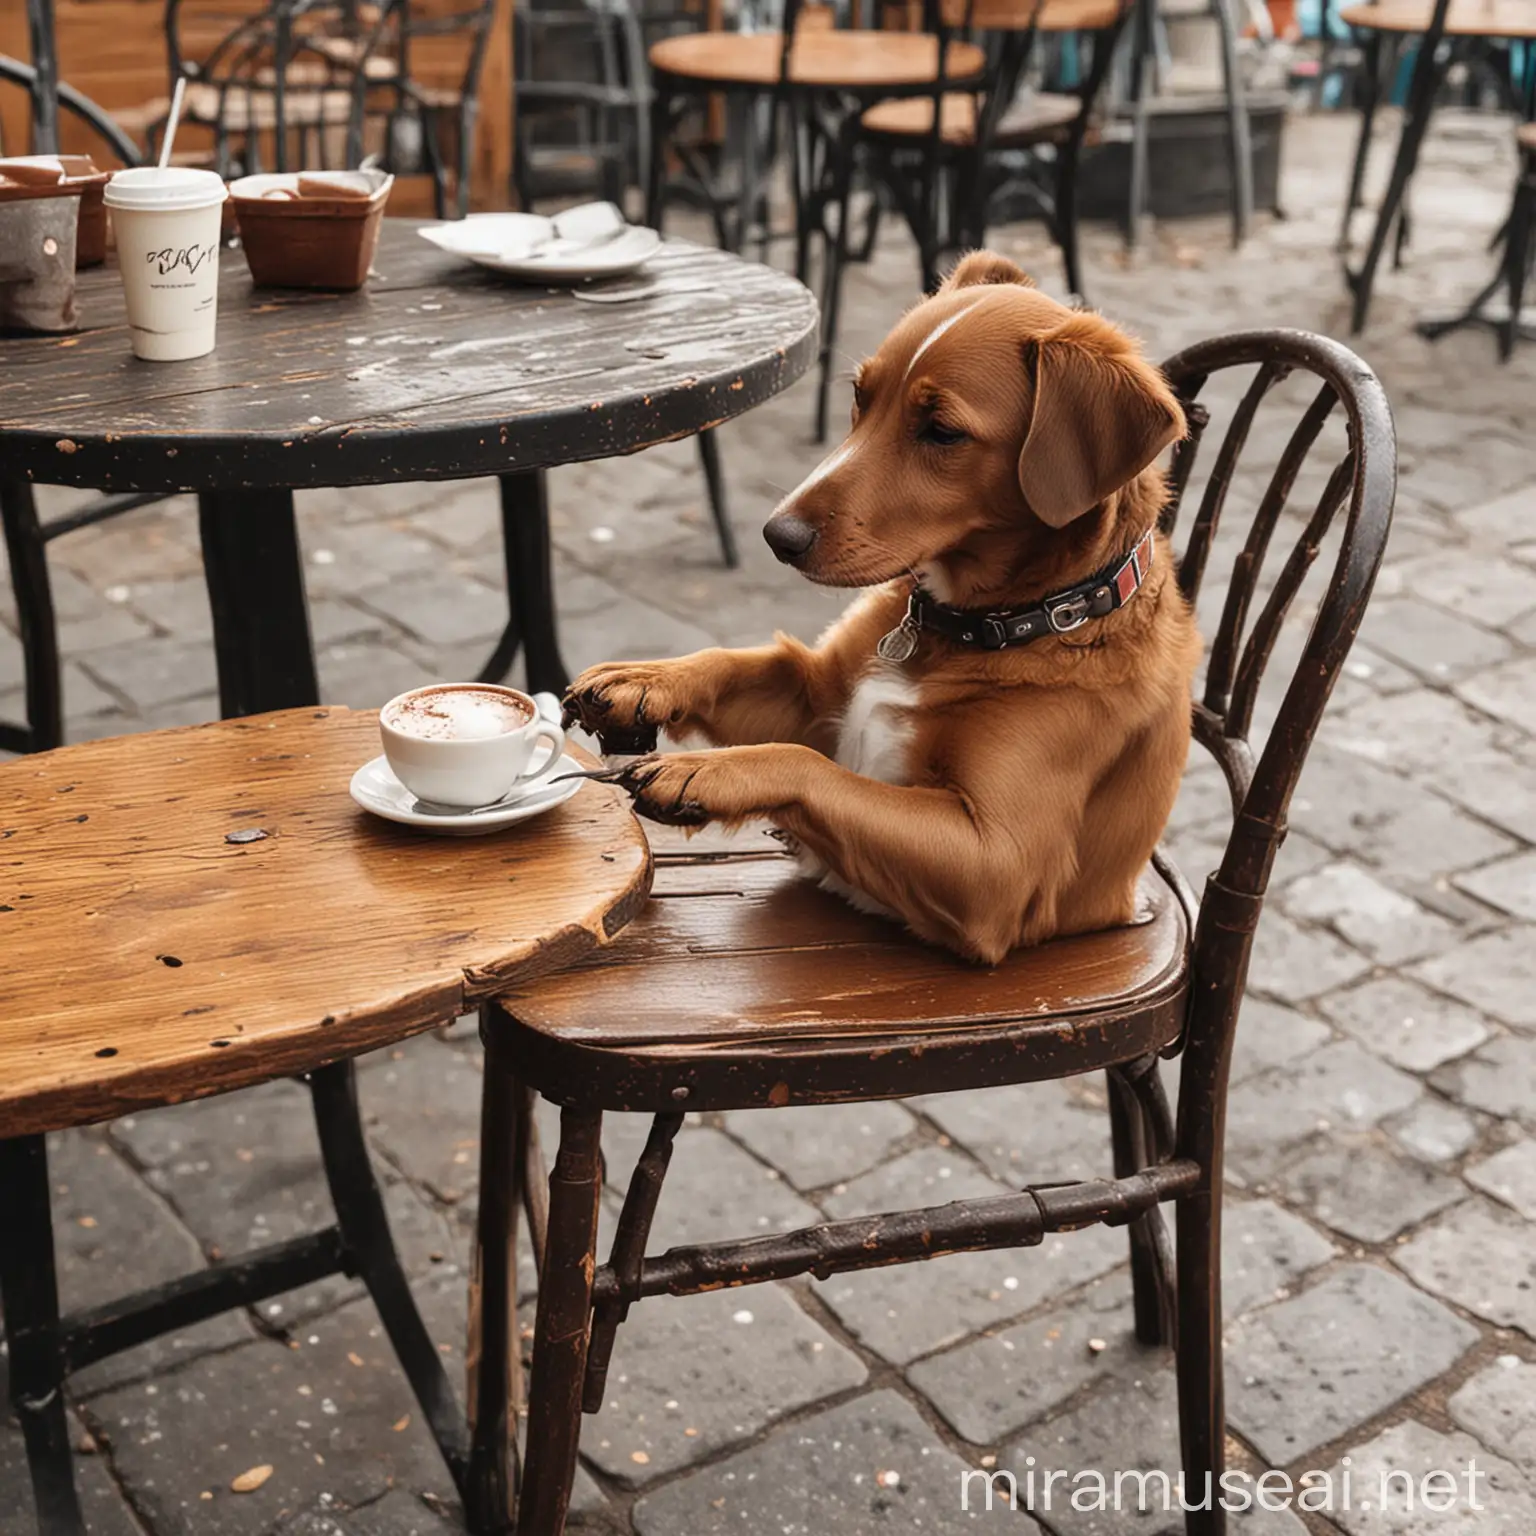 Adorable Dog Enjoying Chocolate at Cafe